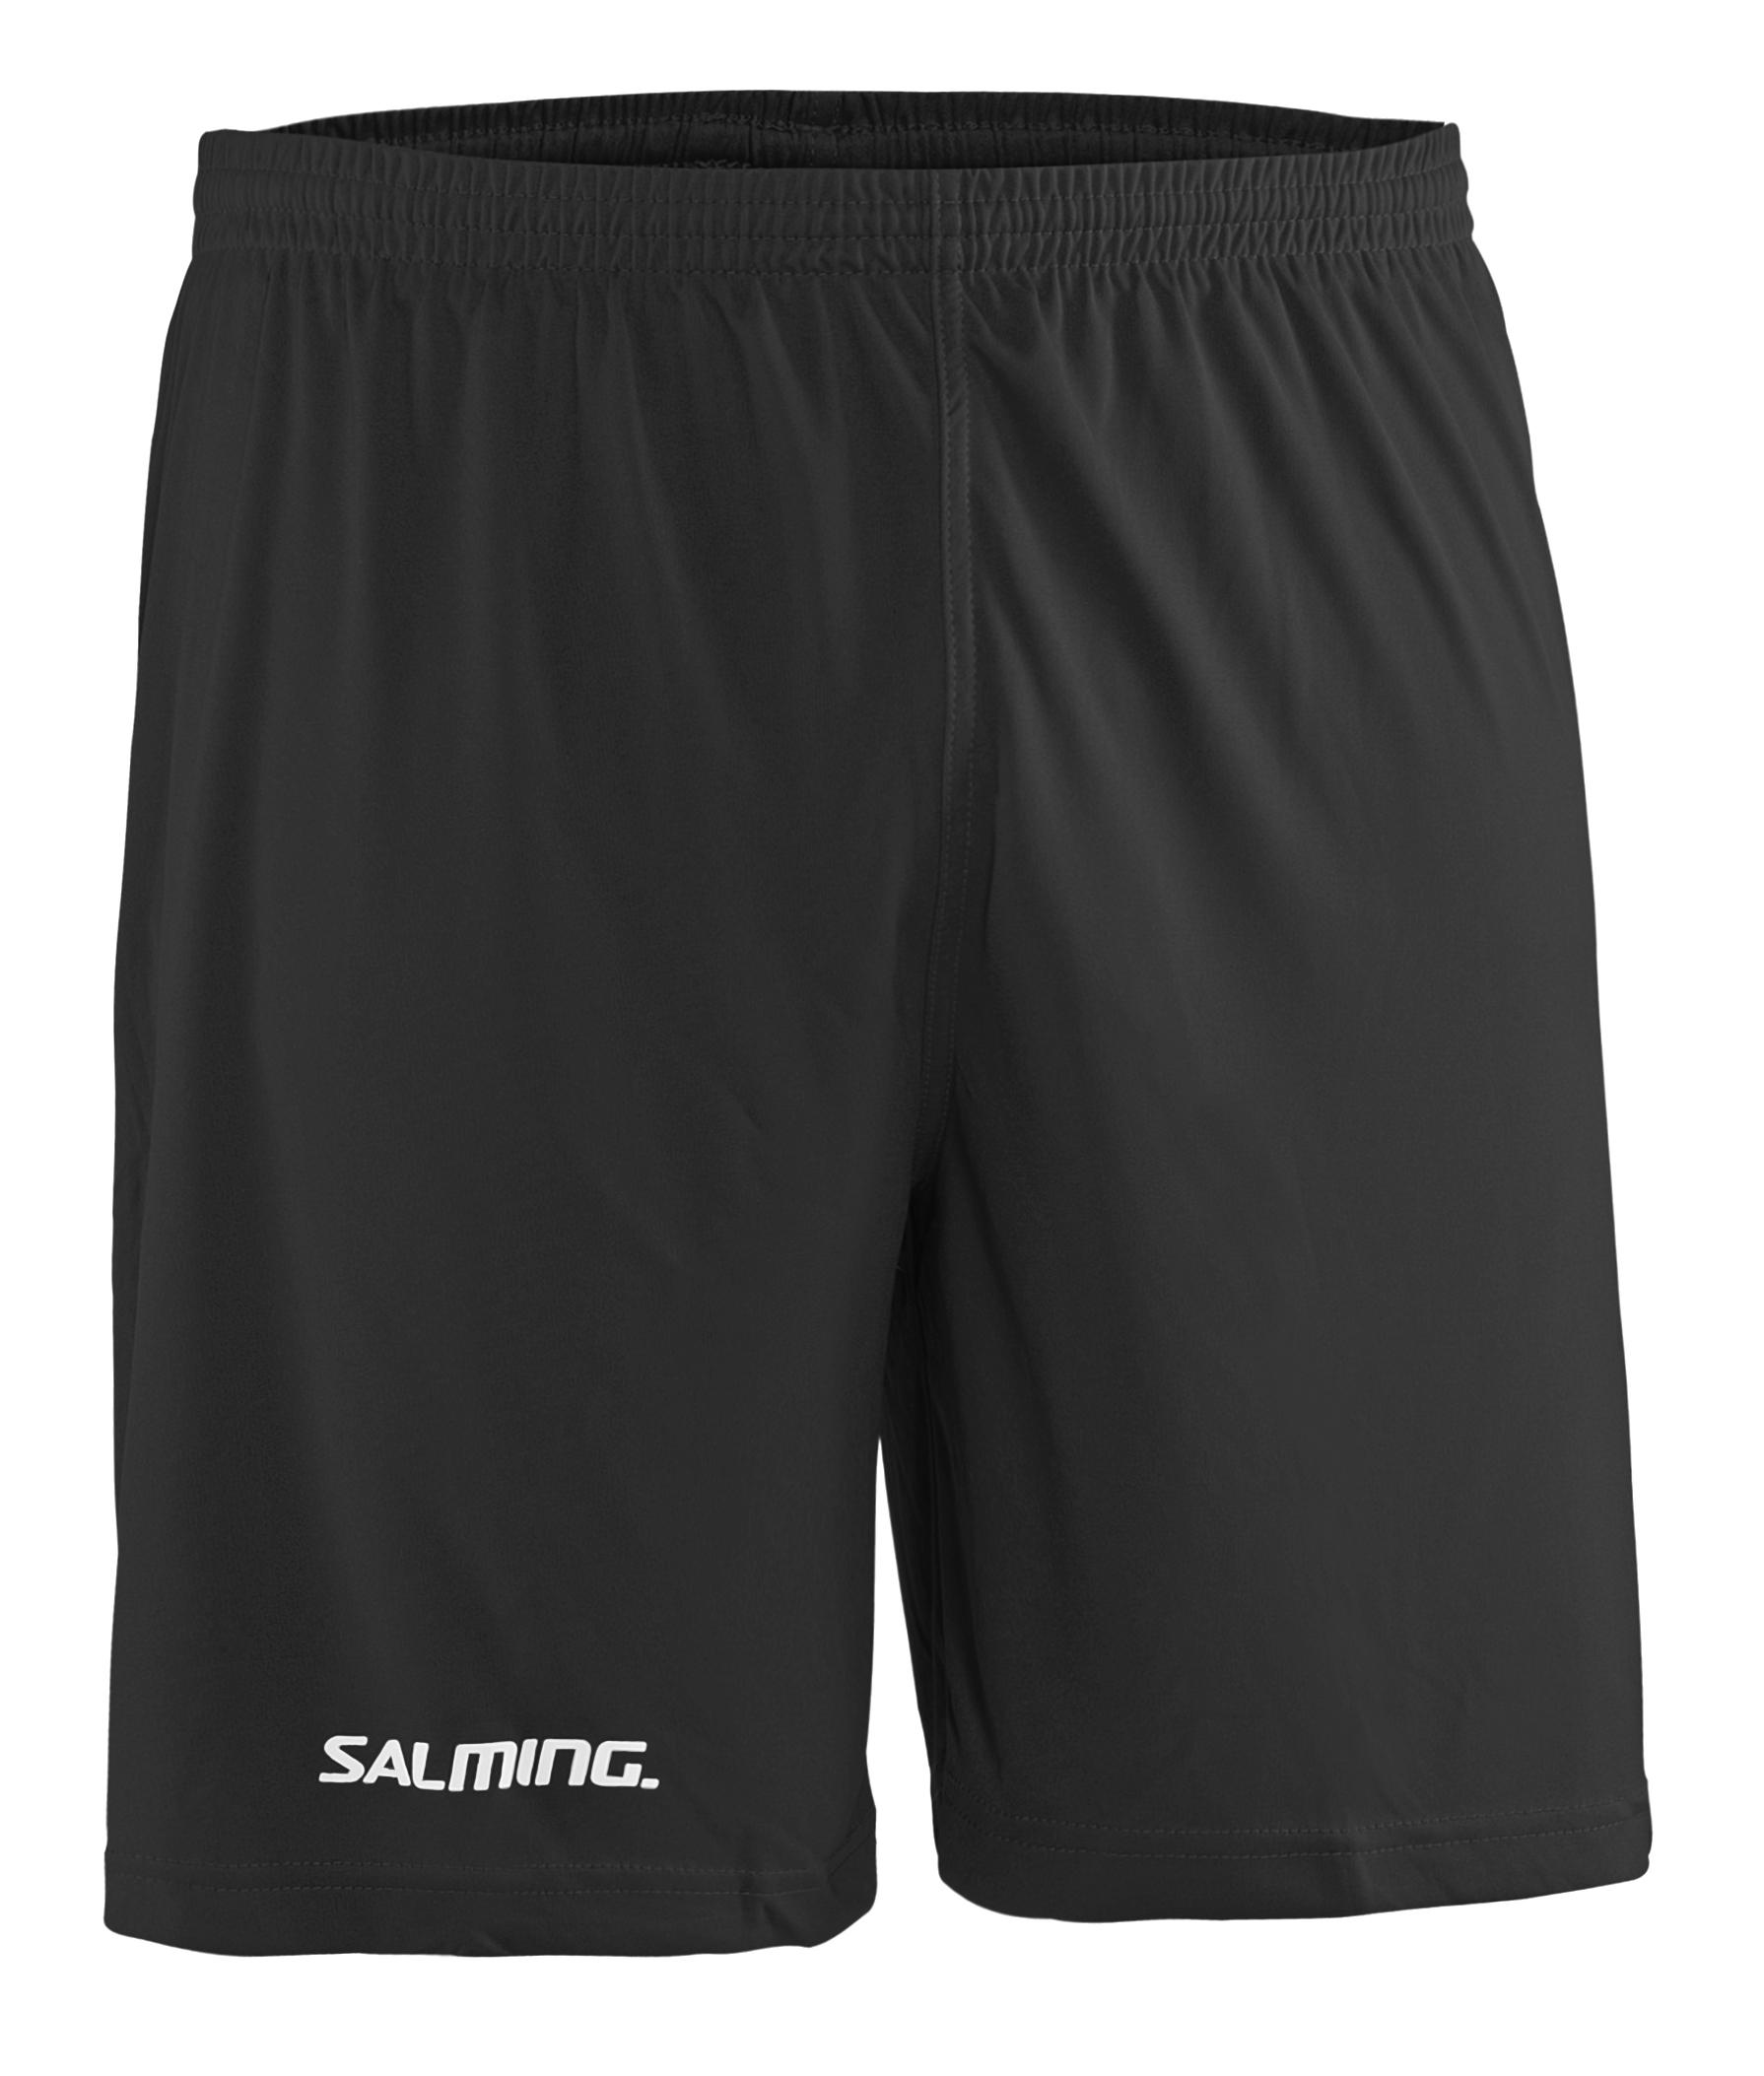 Salming Core Shorts SR Black - Just Squash